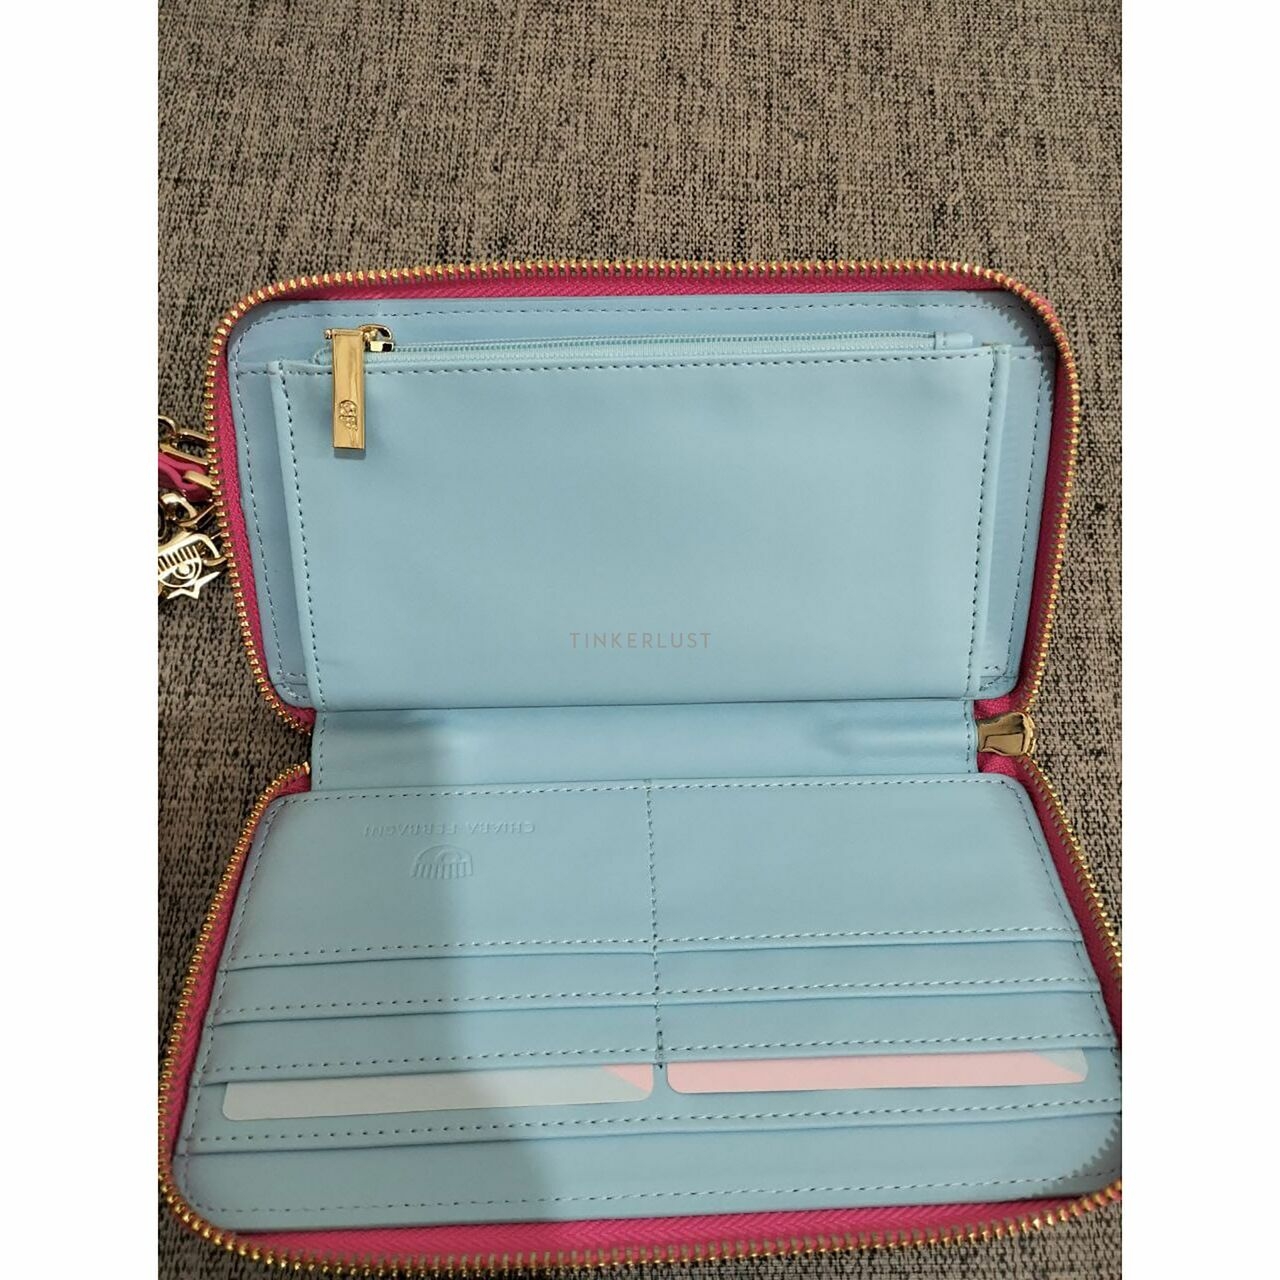 Chiara Ferragni Zipper Wallet On Chain WOC Eye Star in Shocking Pink, inside Soft Blue Sling Bag